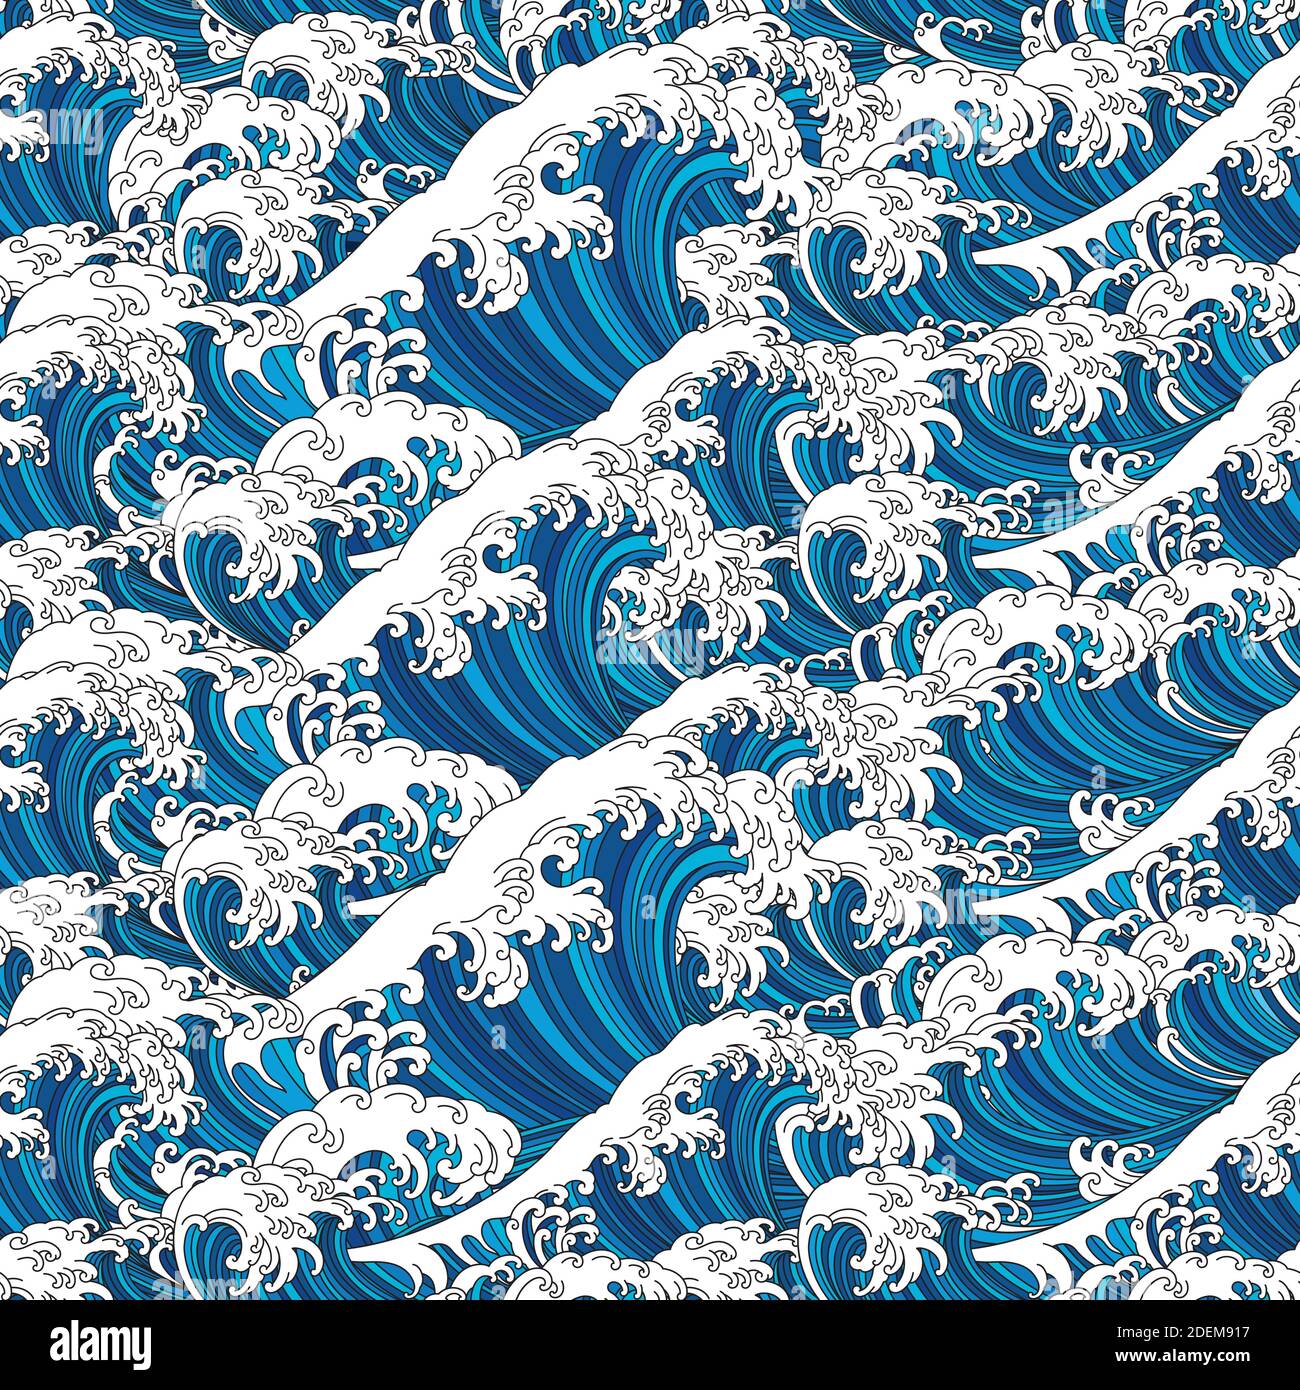 L'onda di kanegawa del maestro HOKUSAI  Wave art, Japanese wave painting,  Japan art